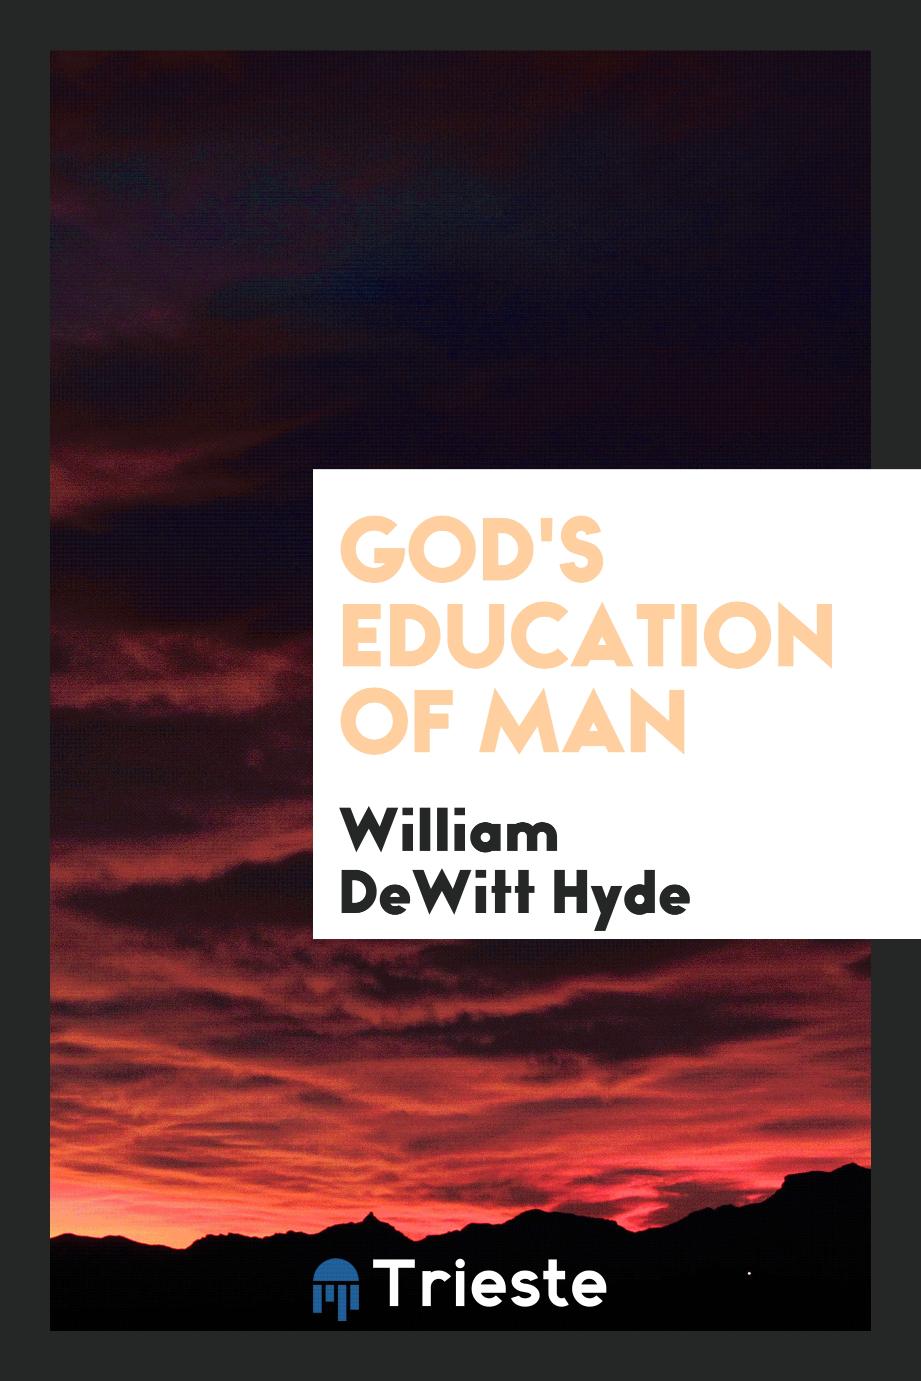 God's education of man